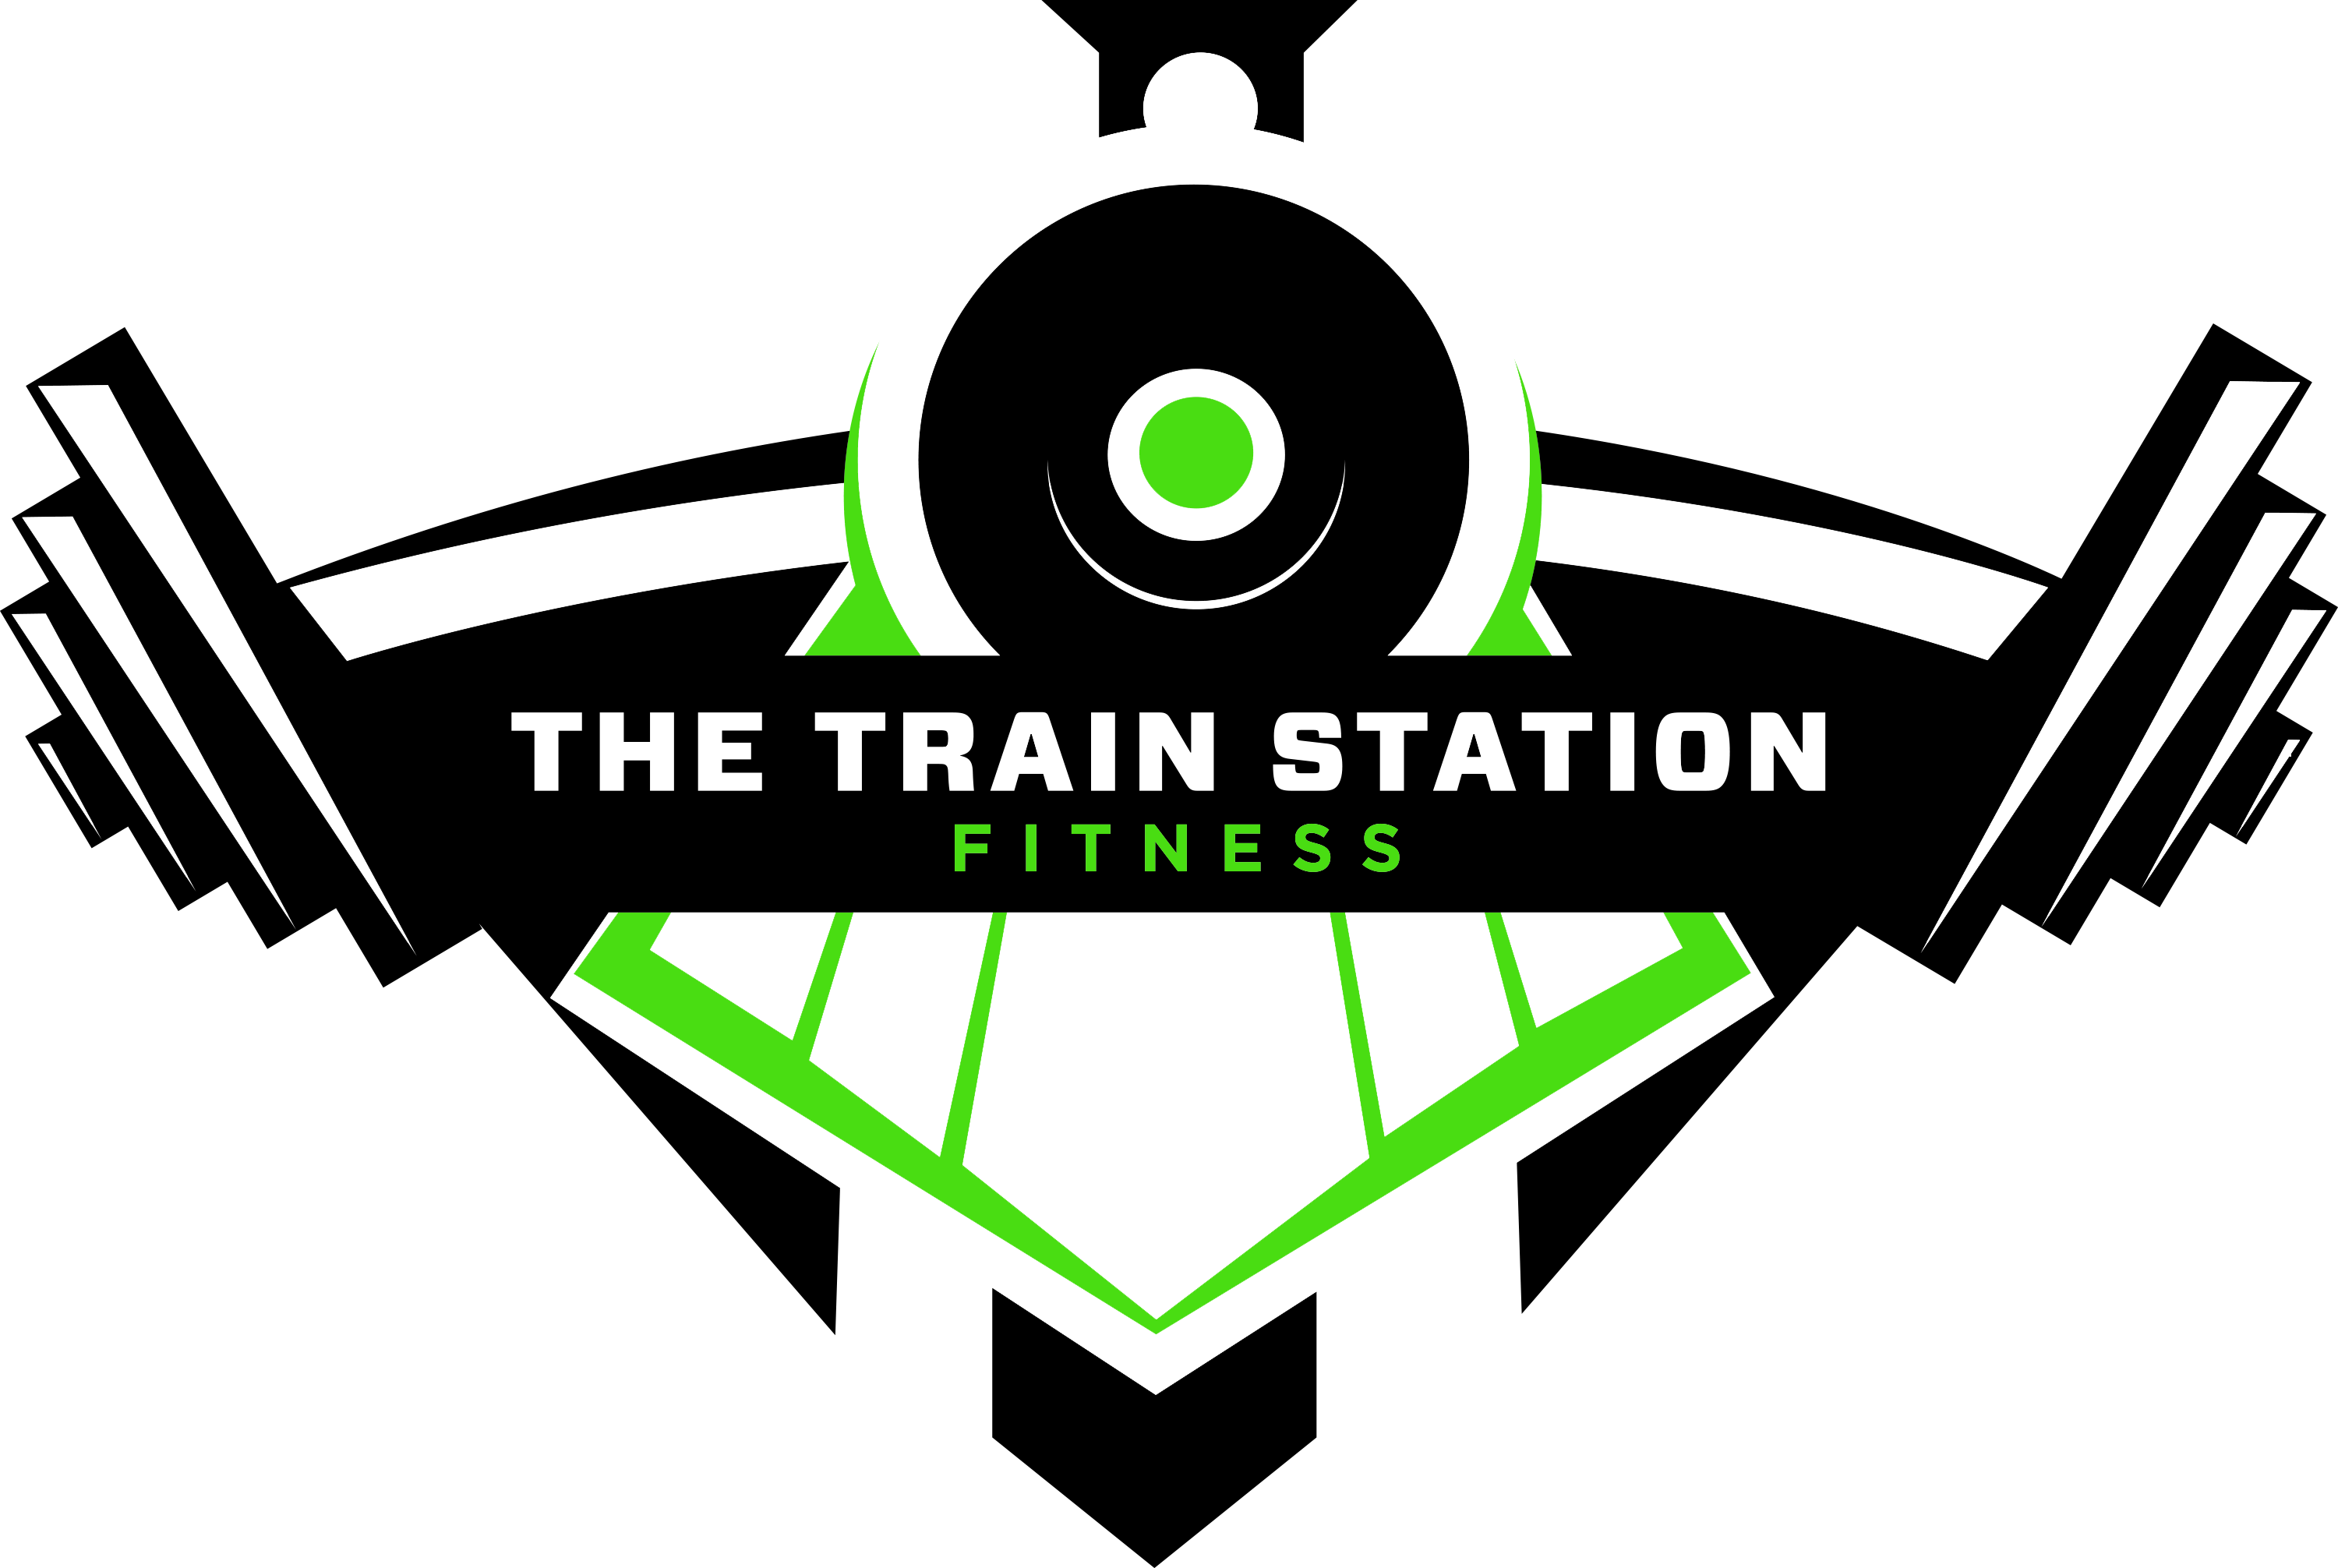 The Train Station Fitness logo